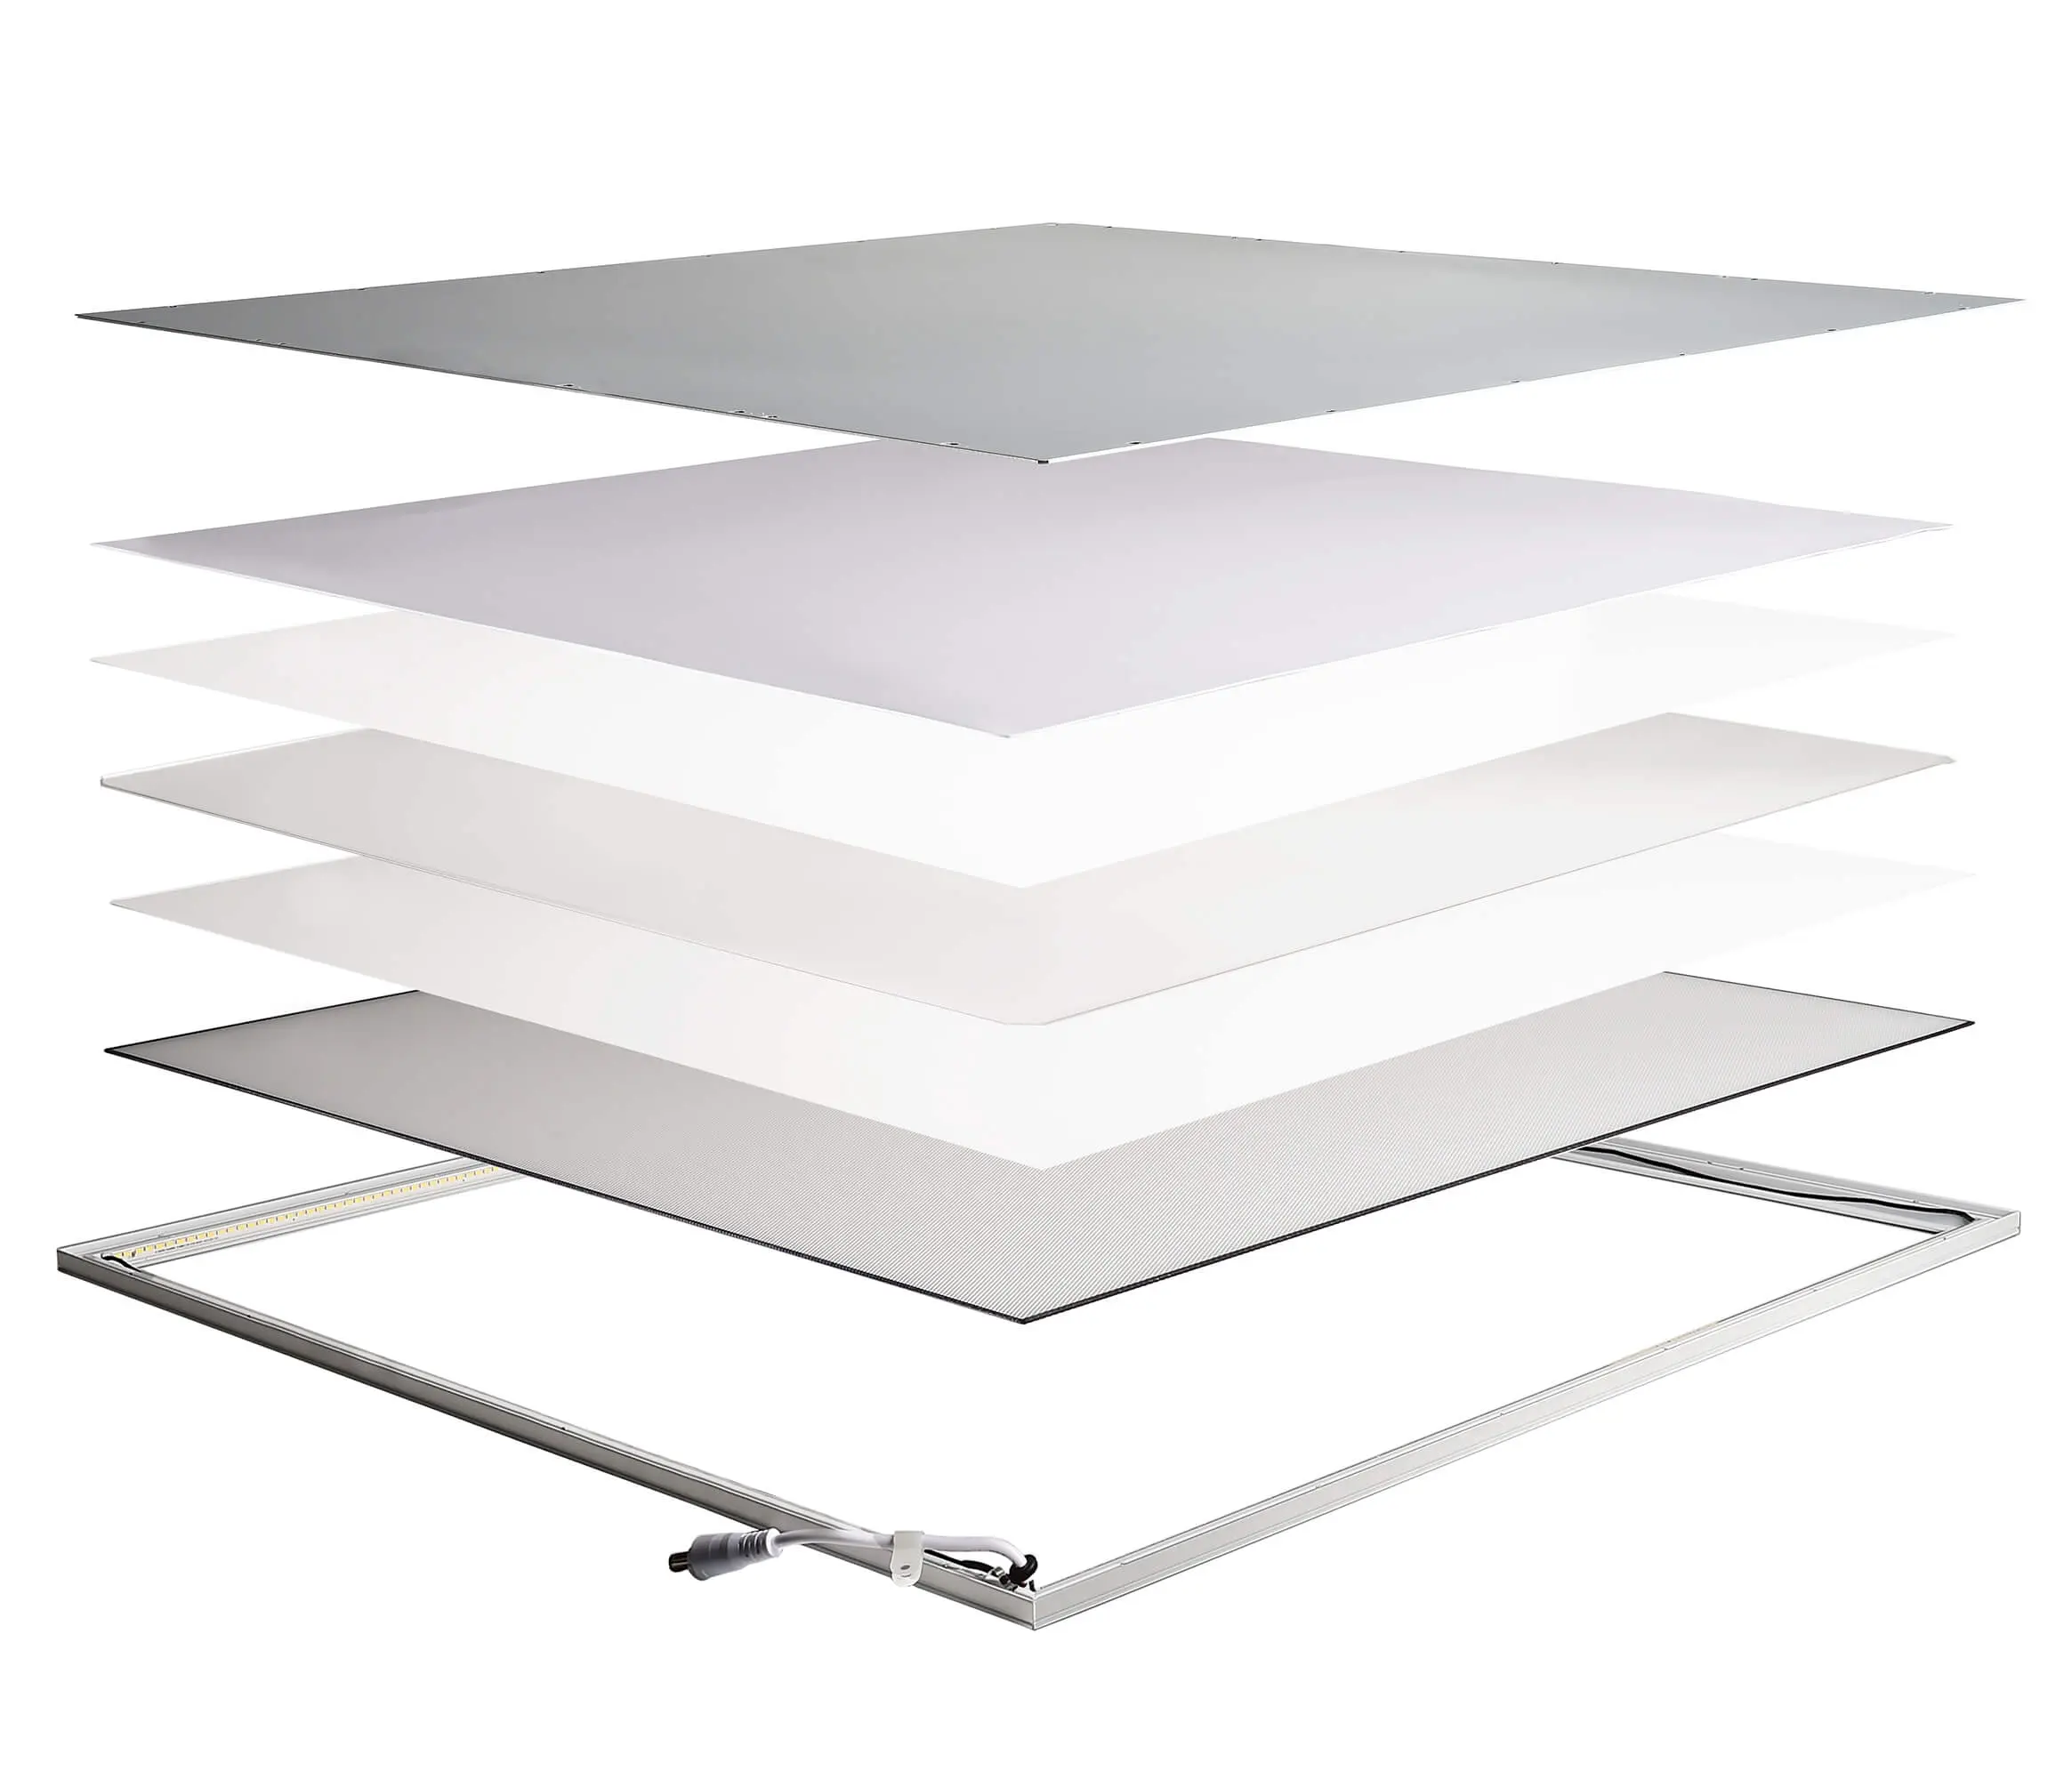 LED-Panel Standard Office weiß 36W, 4000K, 4200lm, 62x62cm